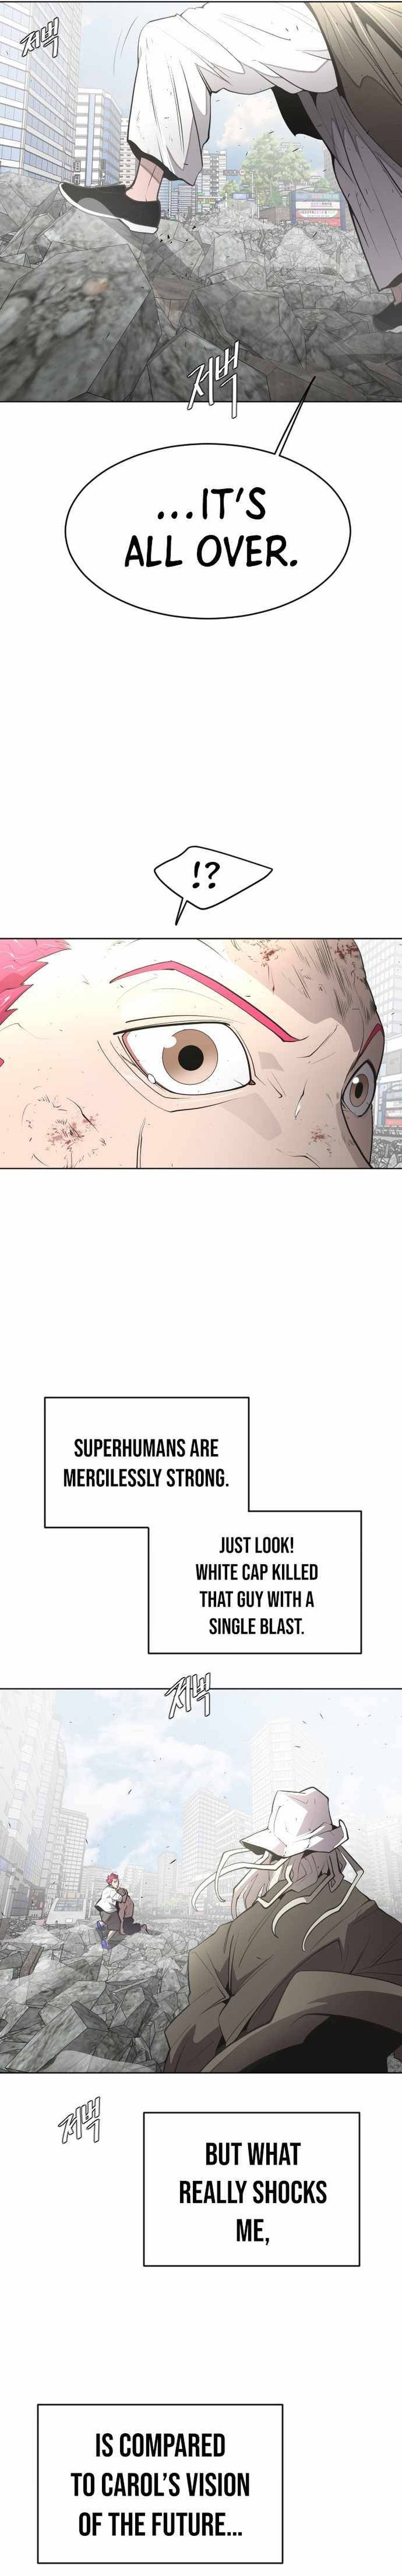 superhuman_era_85_3